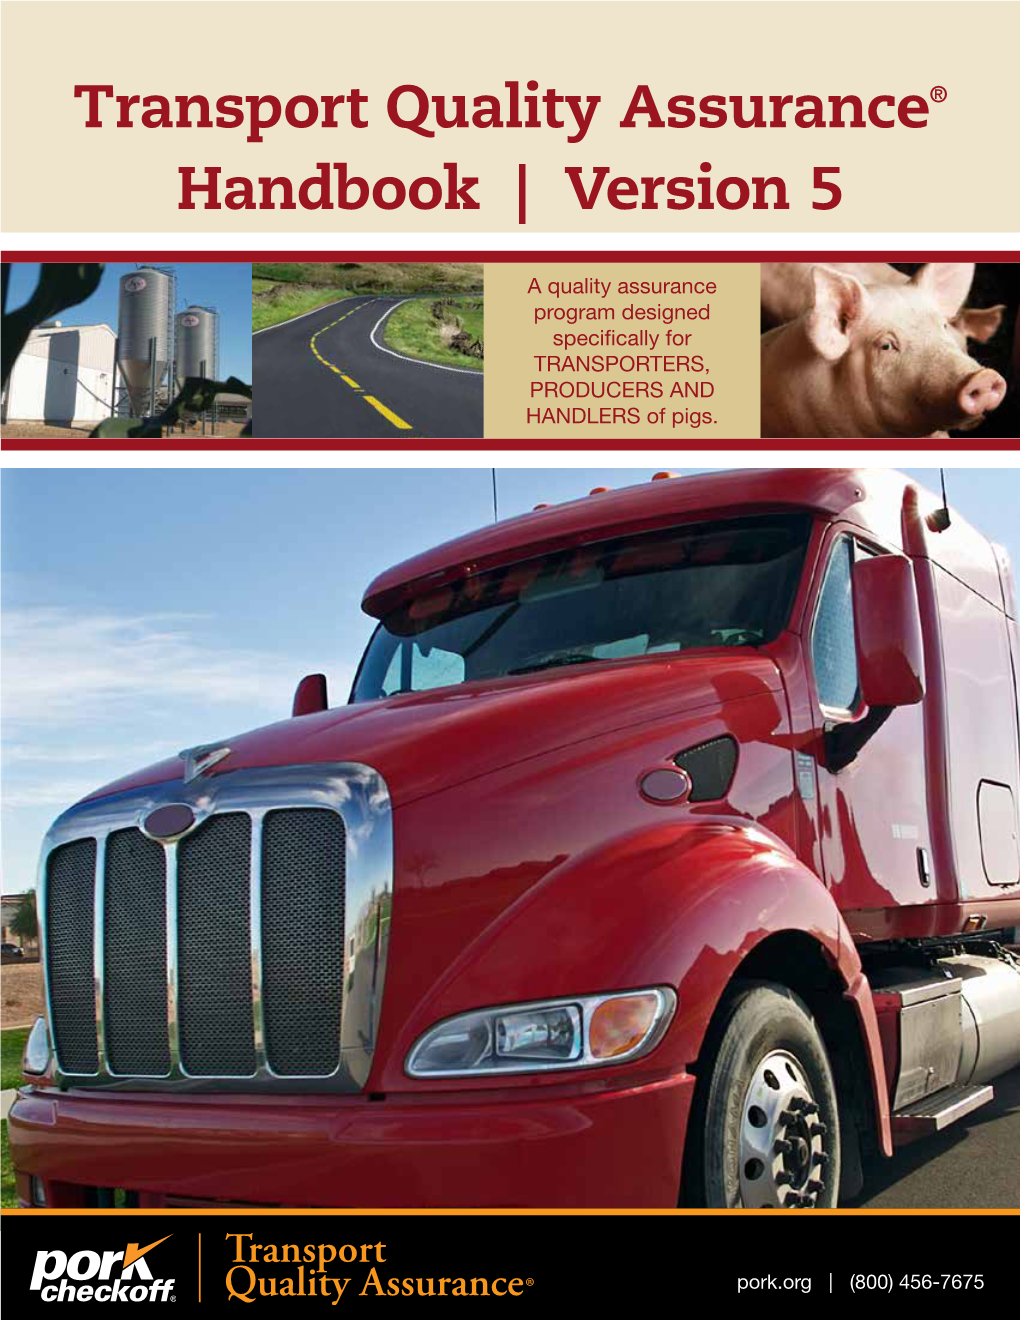 Transport Quality Assurance® Handbook | Version 5